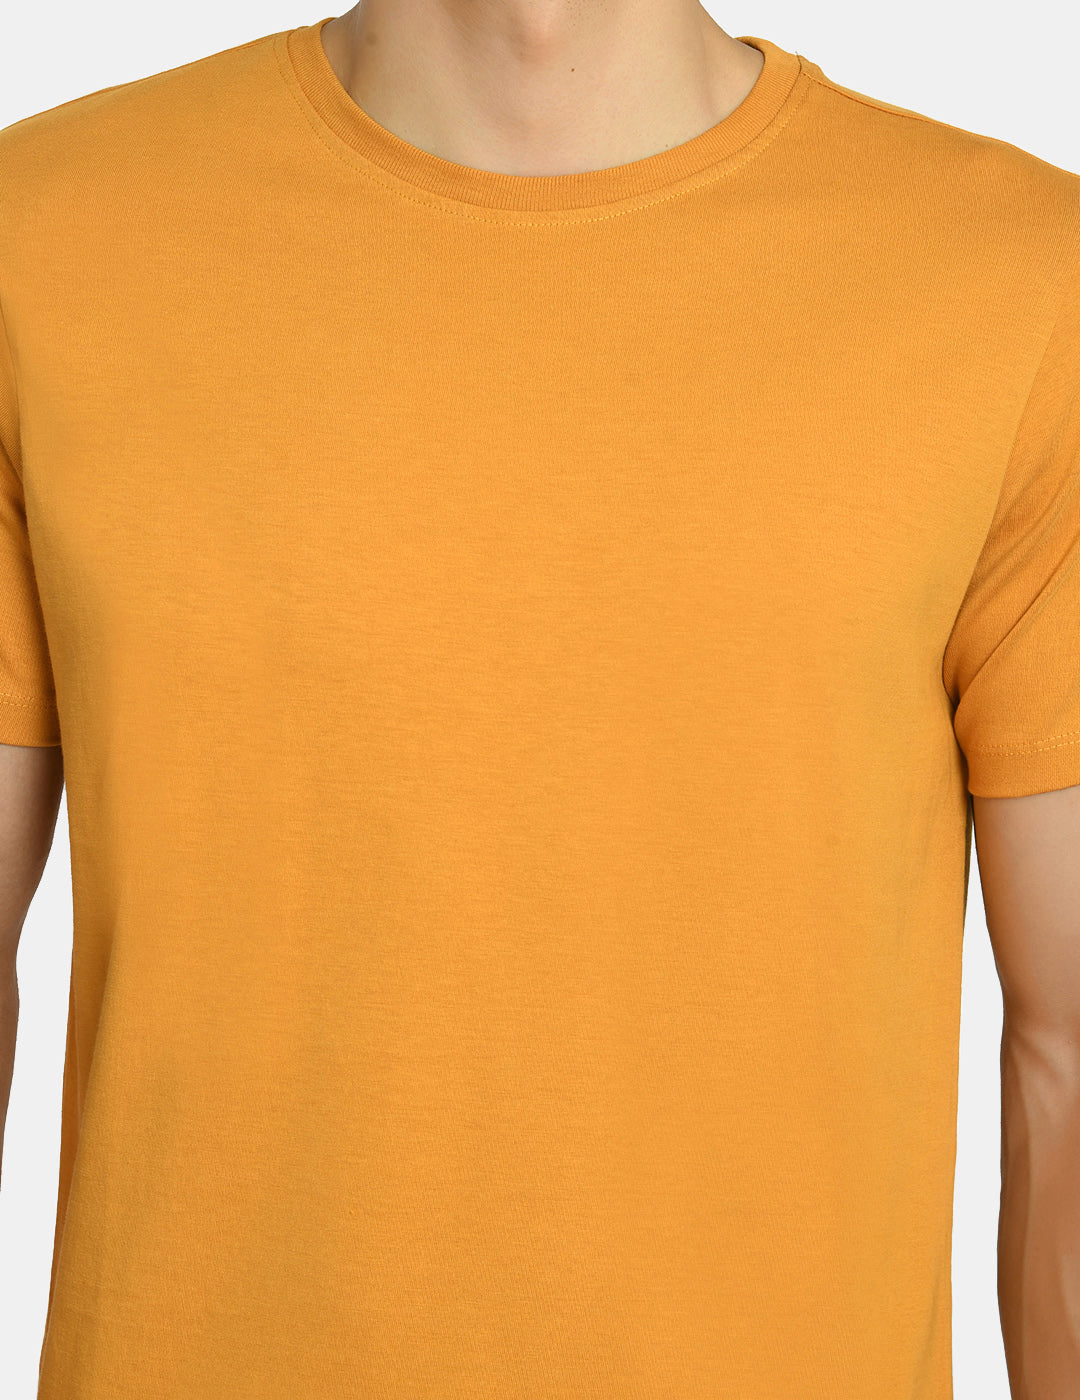 Men's Basic Honey Yellow Regular Fit T-Shirt